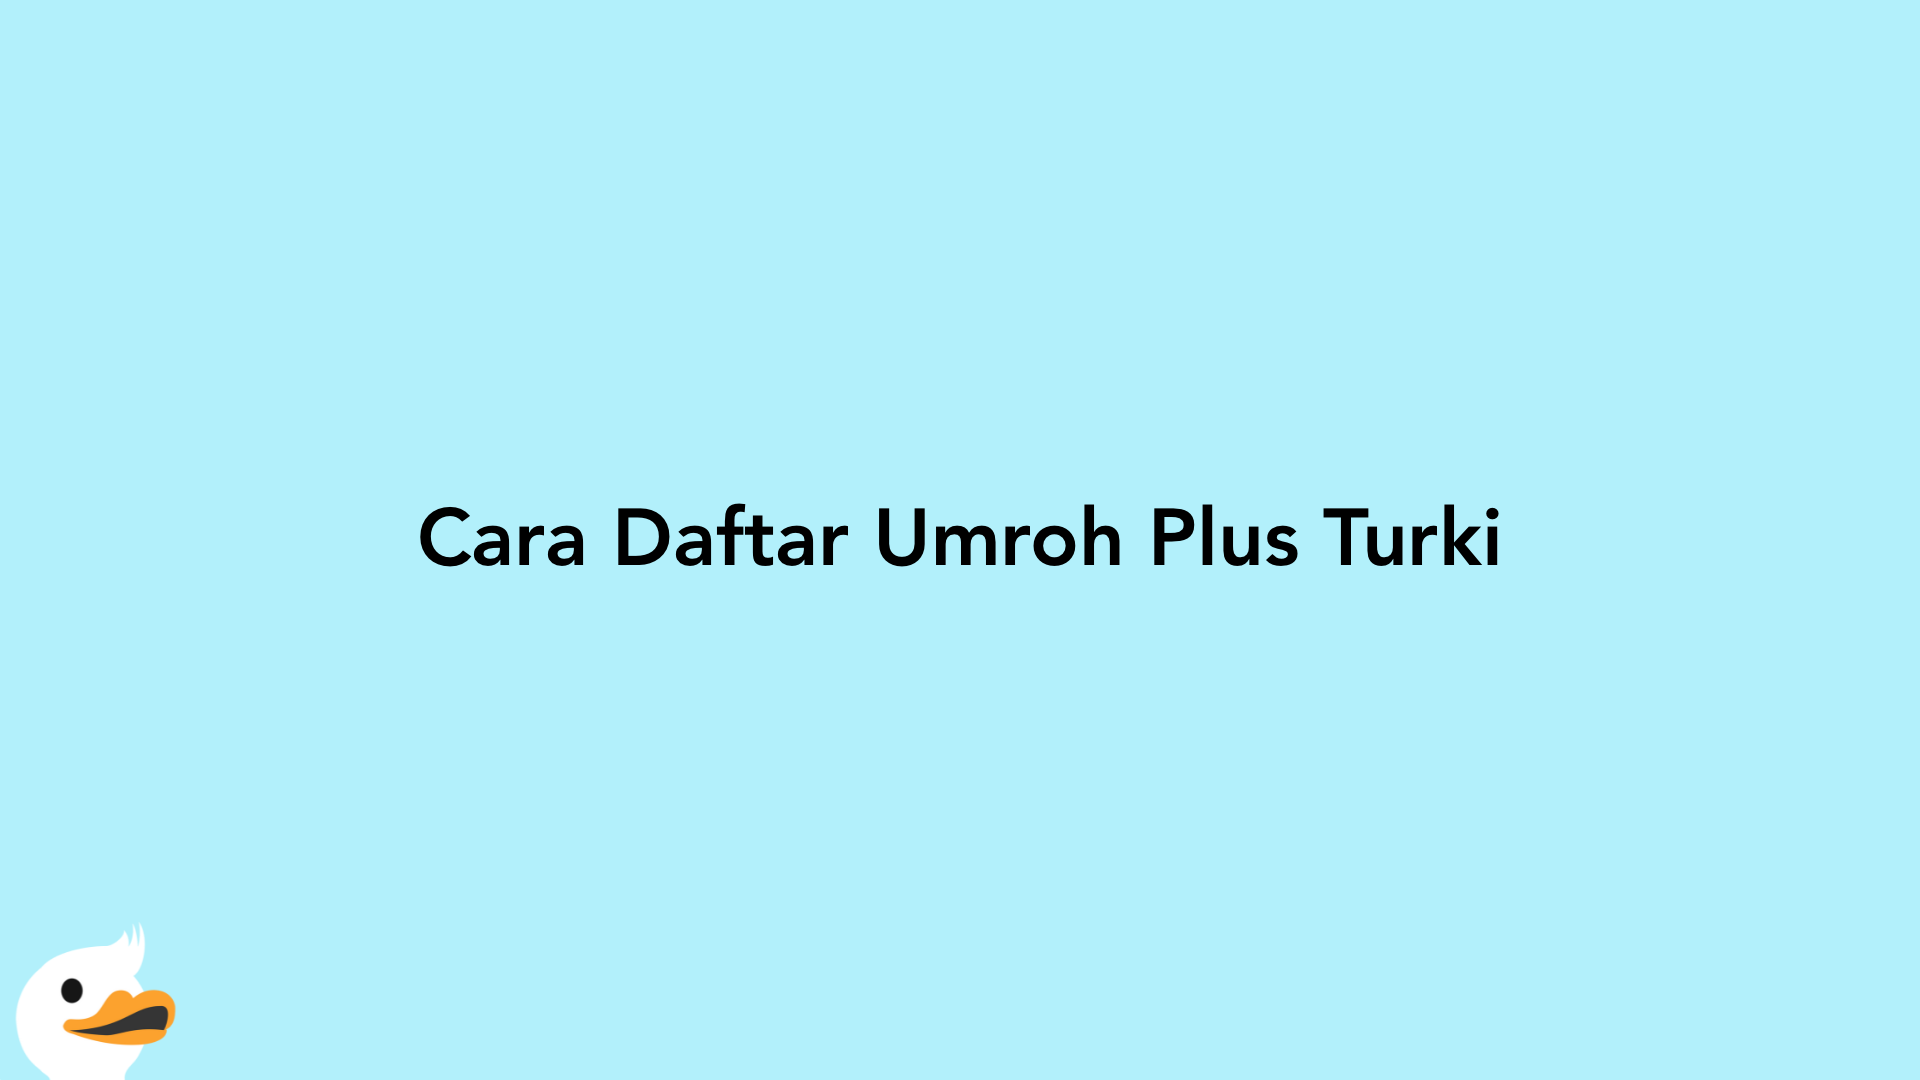 Cara Daftar Umroh Plus Turki